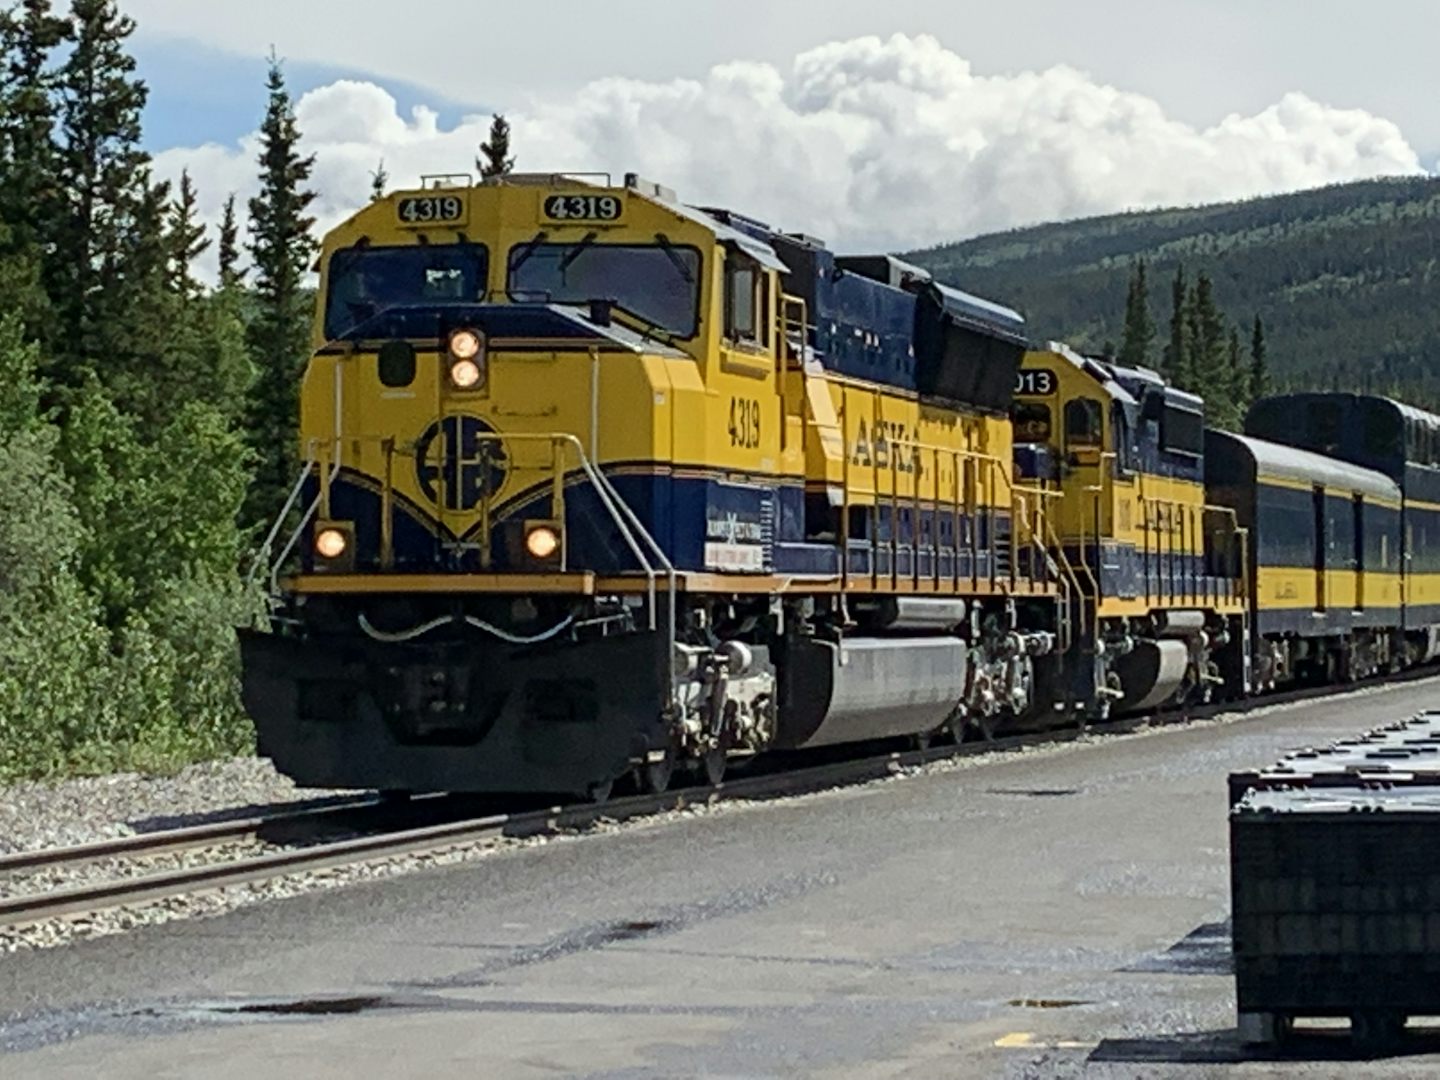 Train from Denali park to Fairbanks.